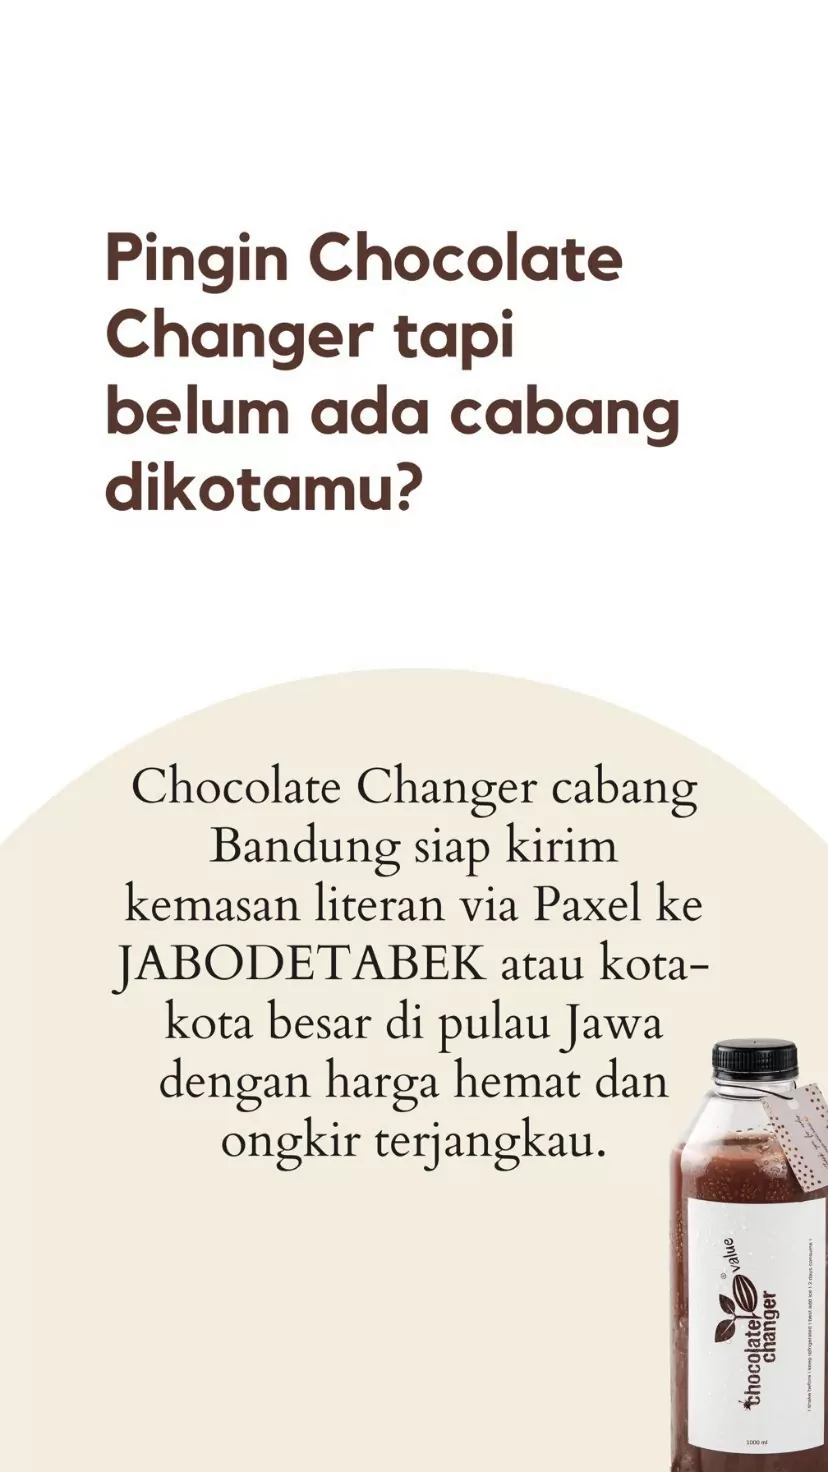 Chocolate Changer: Produk, Analisa SWOT, Franchise 9